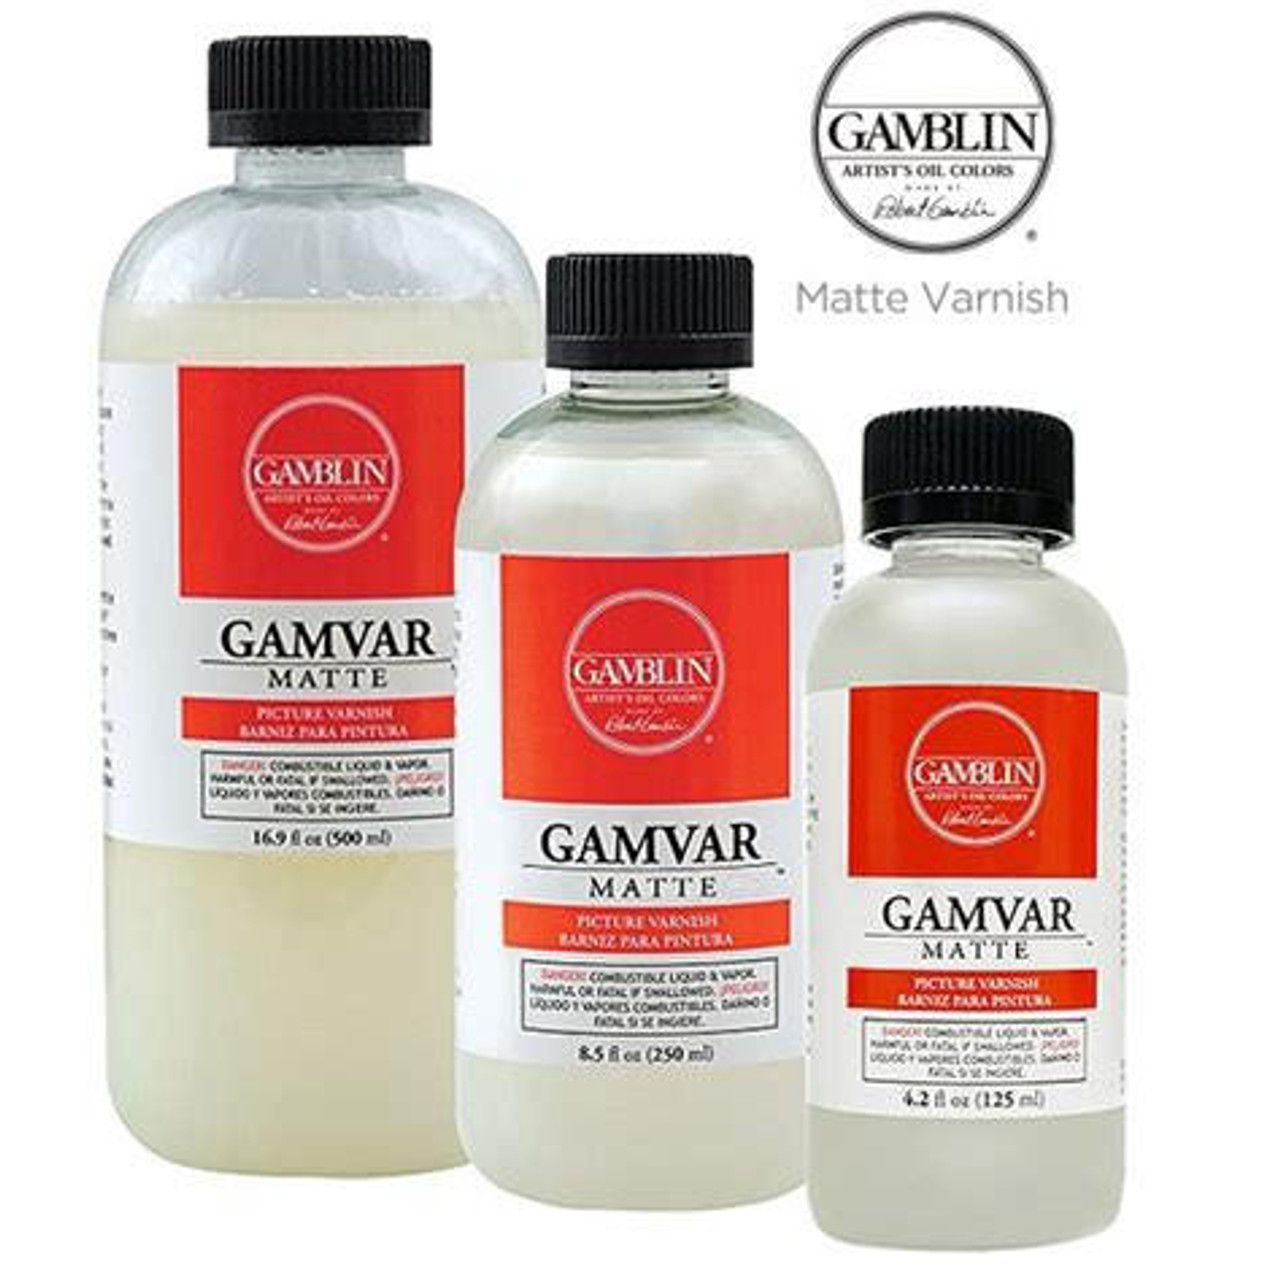 Gamblin - Gamvar Picture Varnish - Gloss - 8.5 oz.